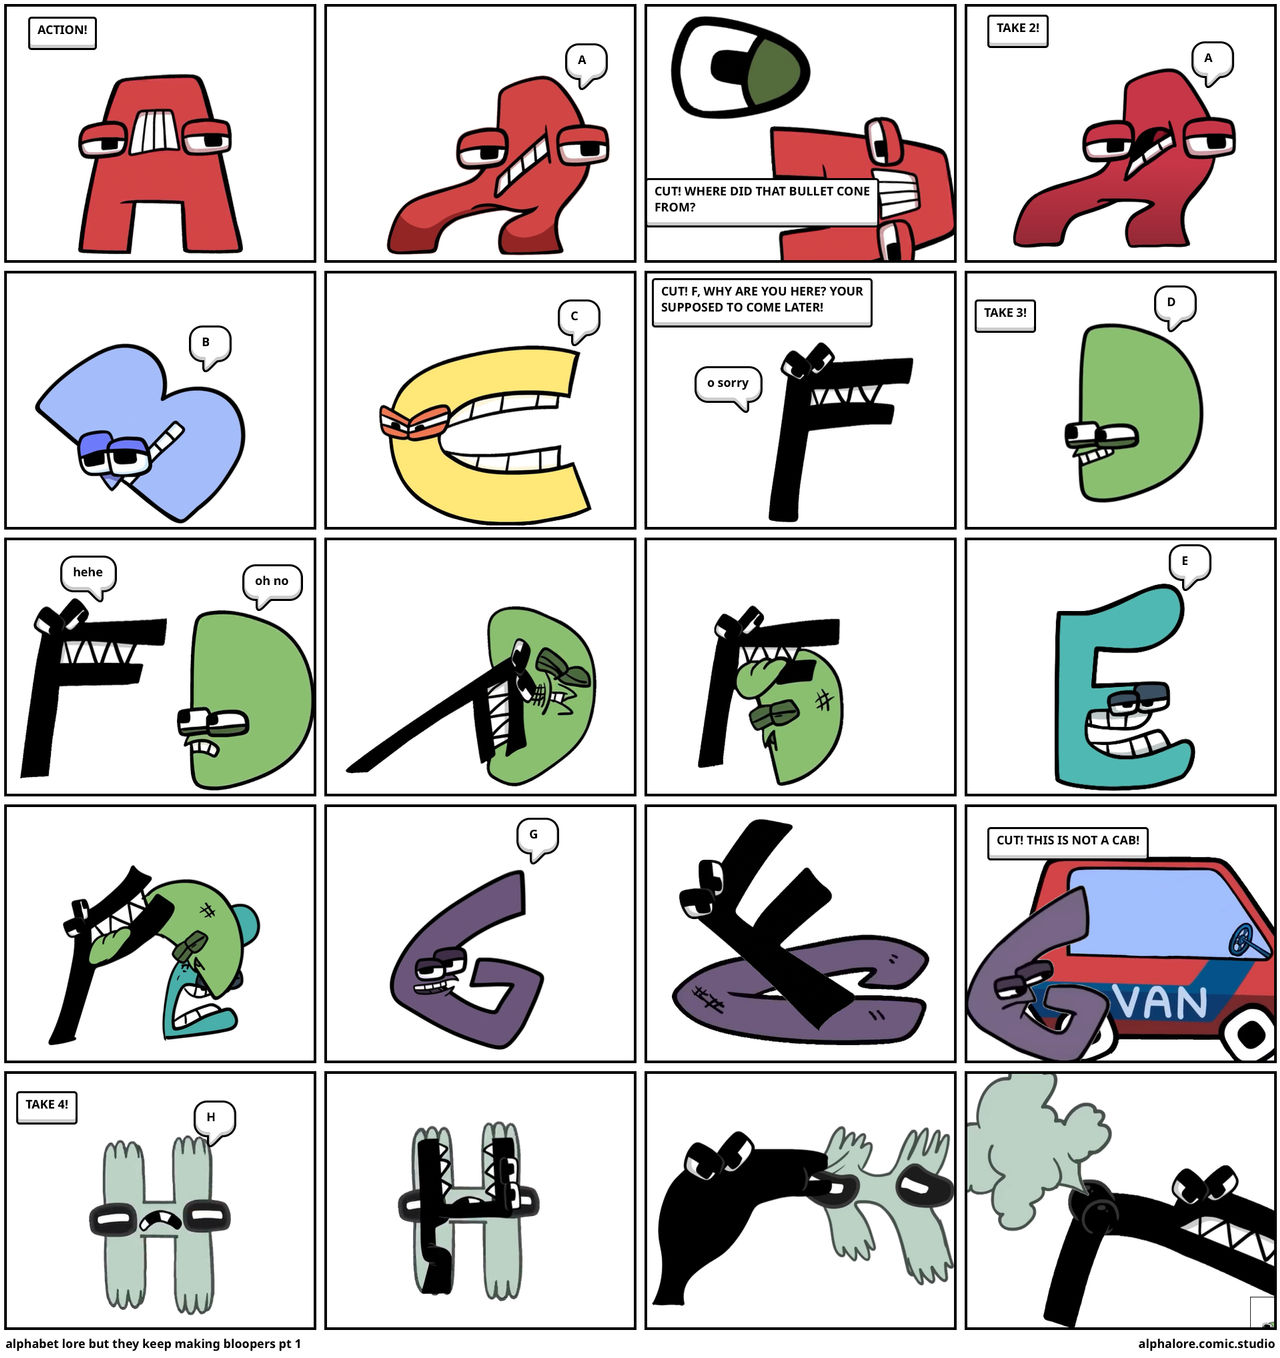 Russian Alphabet Lore But Cursed (Part 1) - Comic Studio